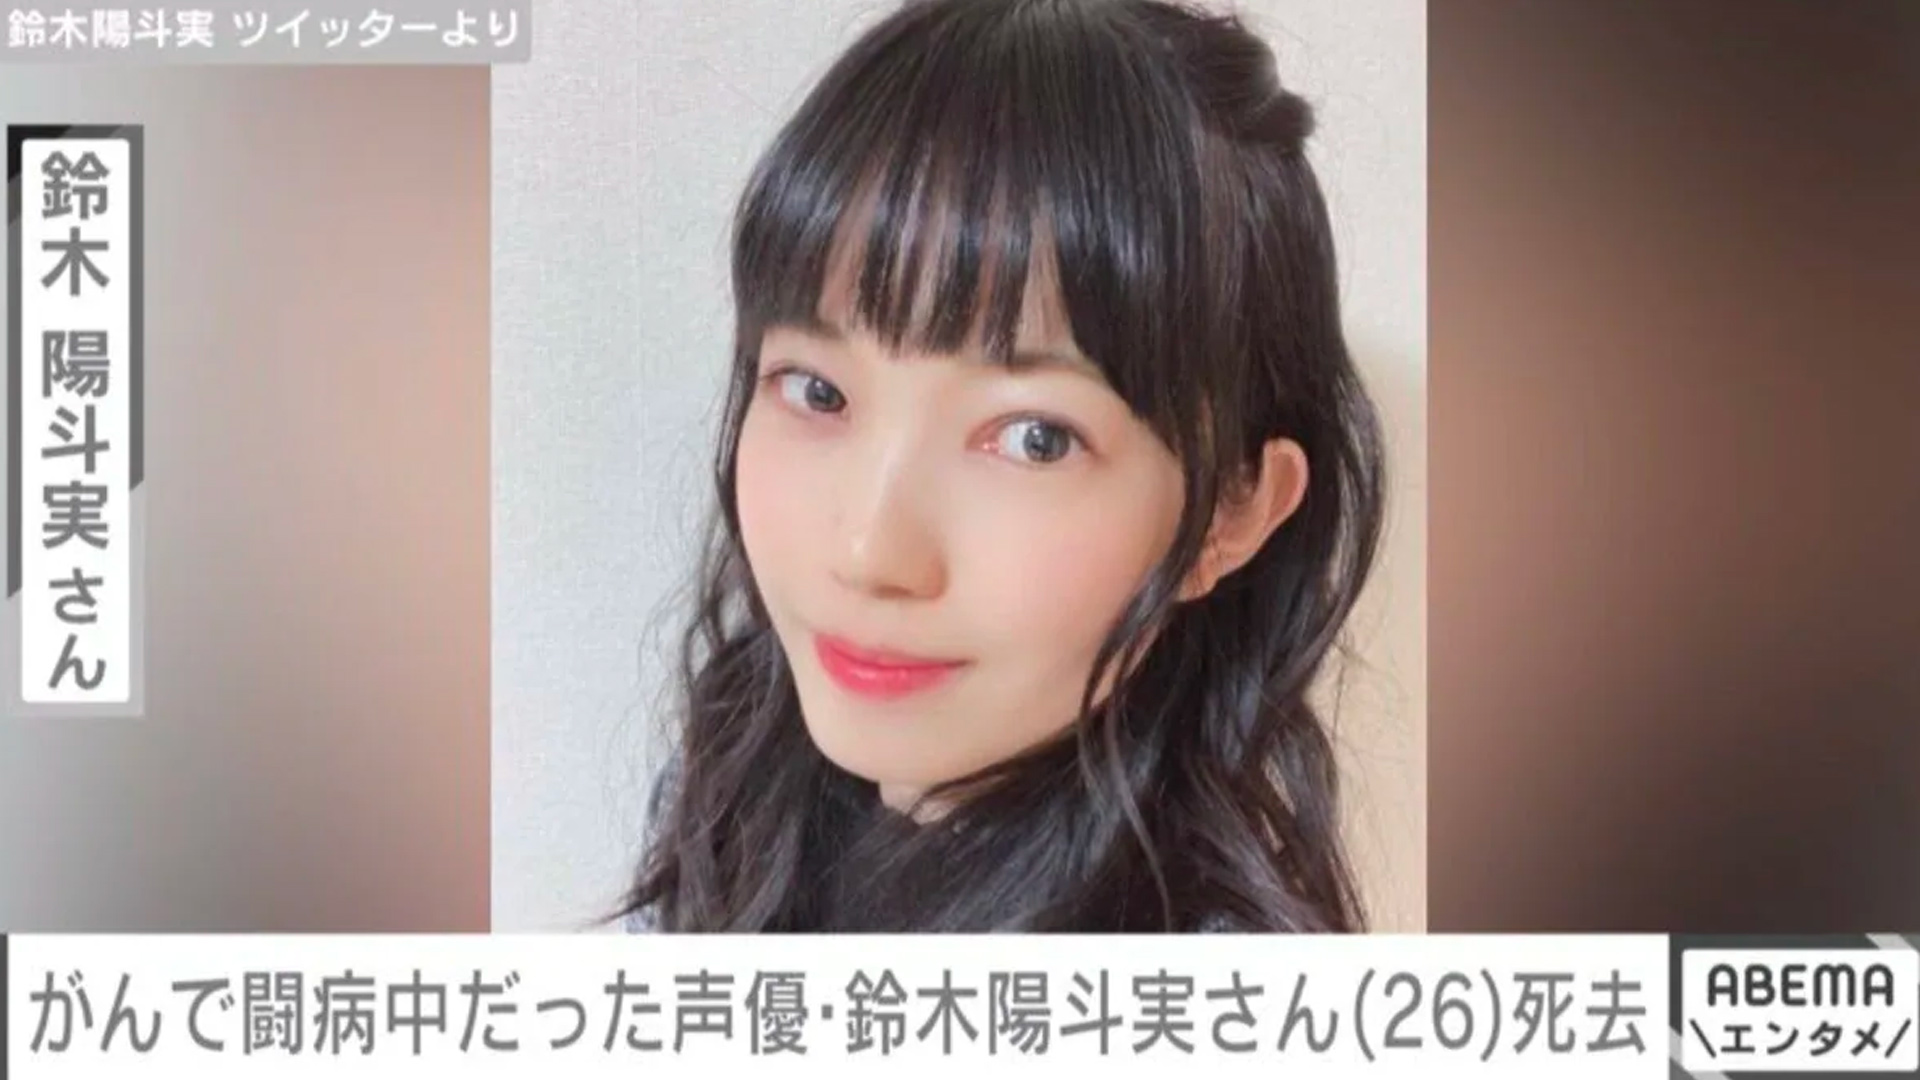 Voice actress Hitomi Suzuki passes away at the age of 26 - Pledge Times